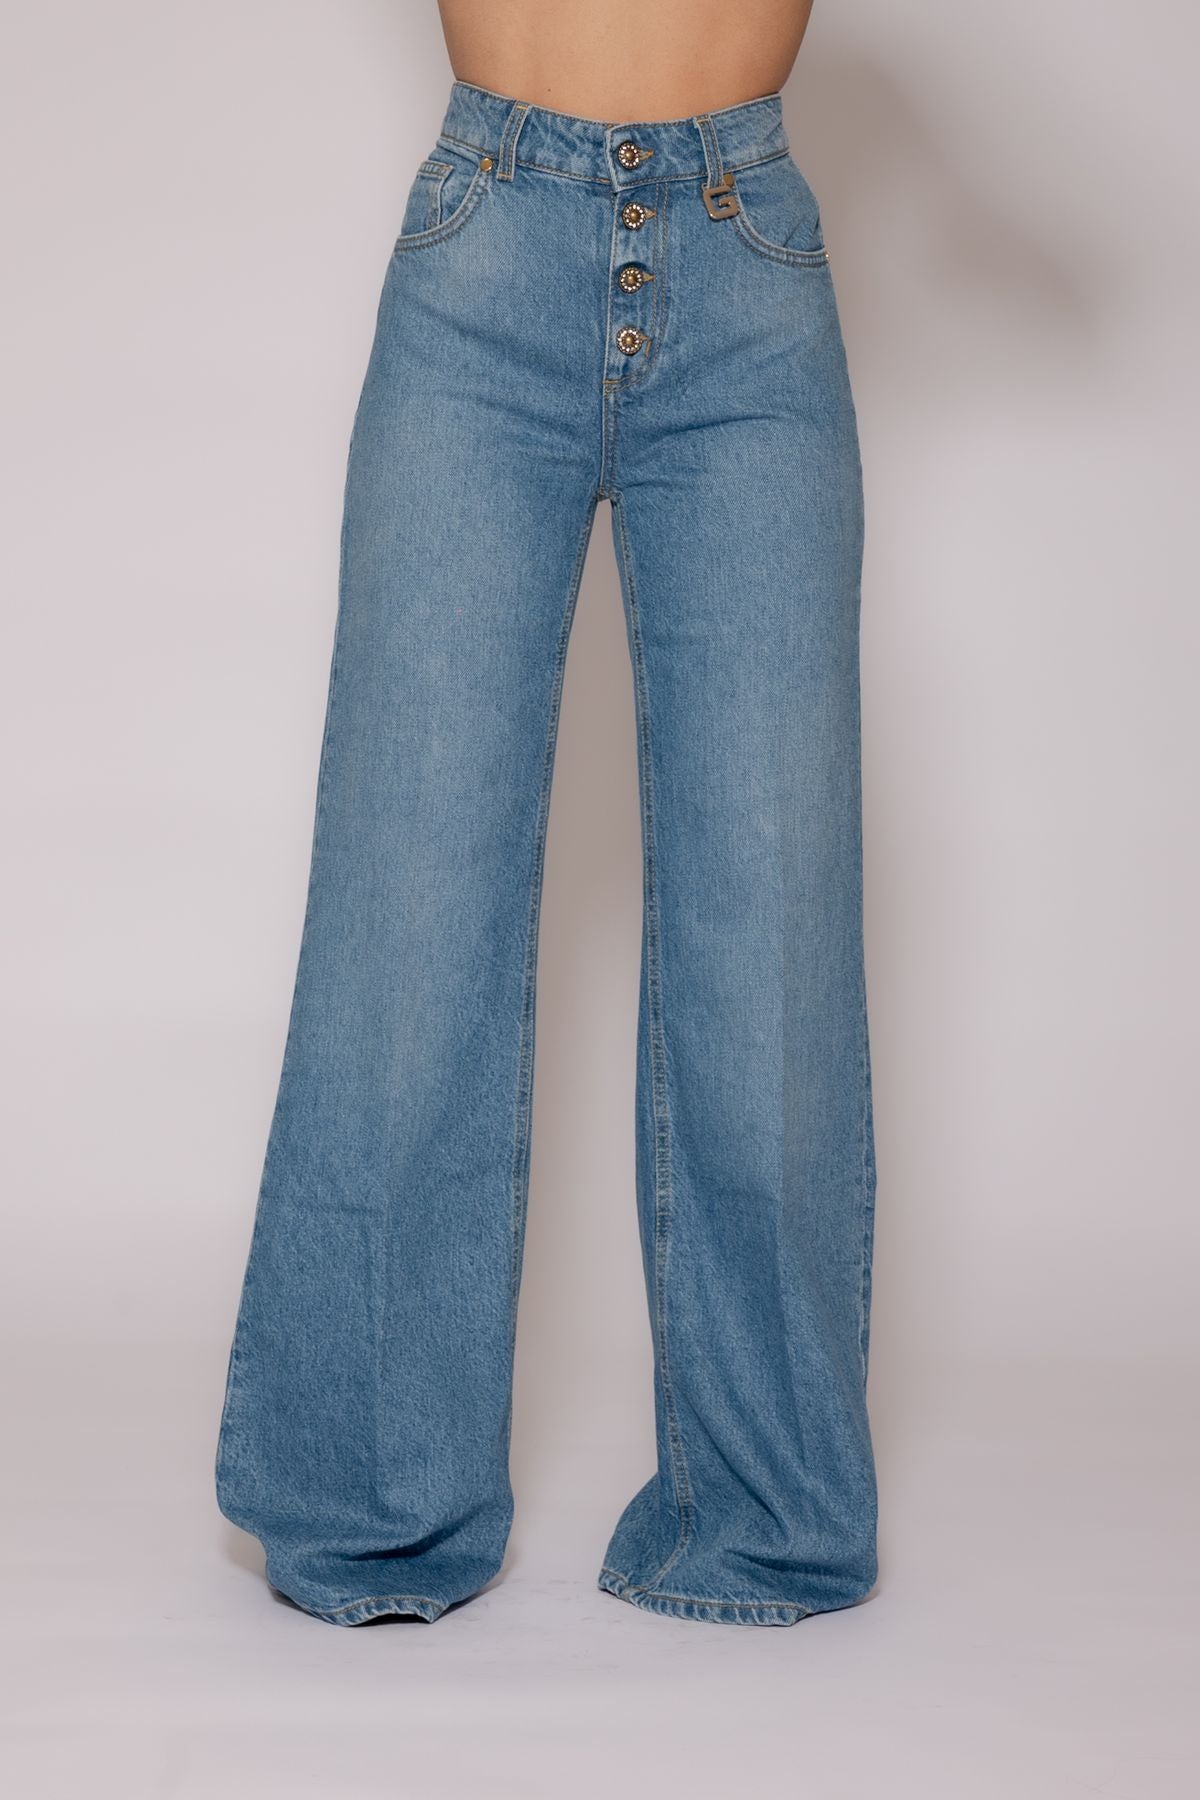 gbdp19733 - jeans - GAELLE PARIS